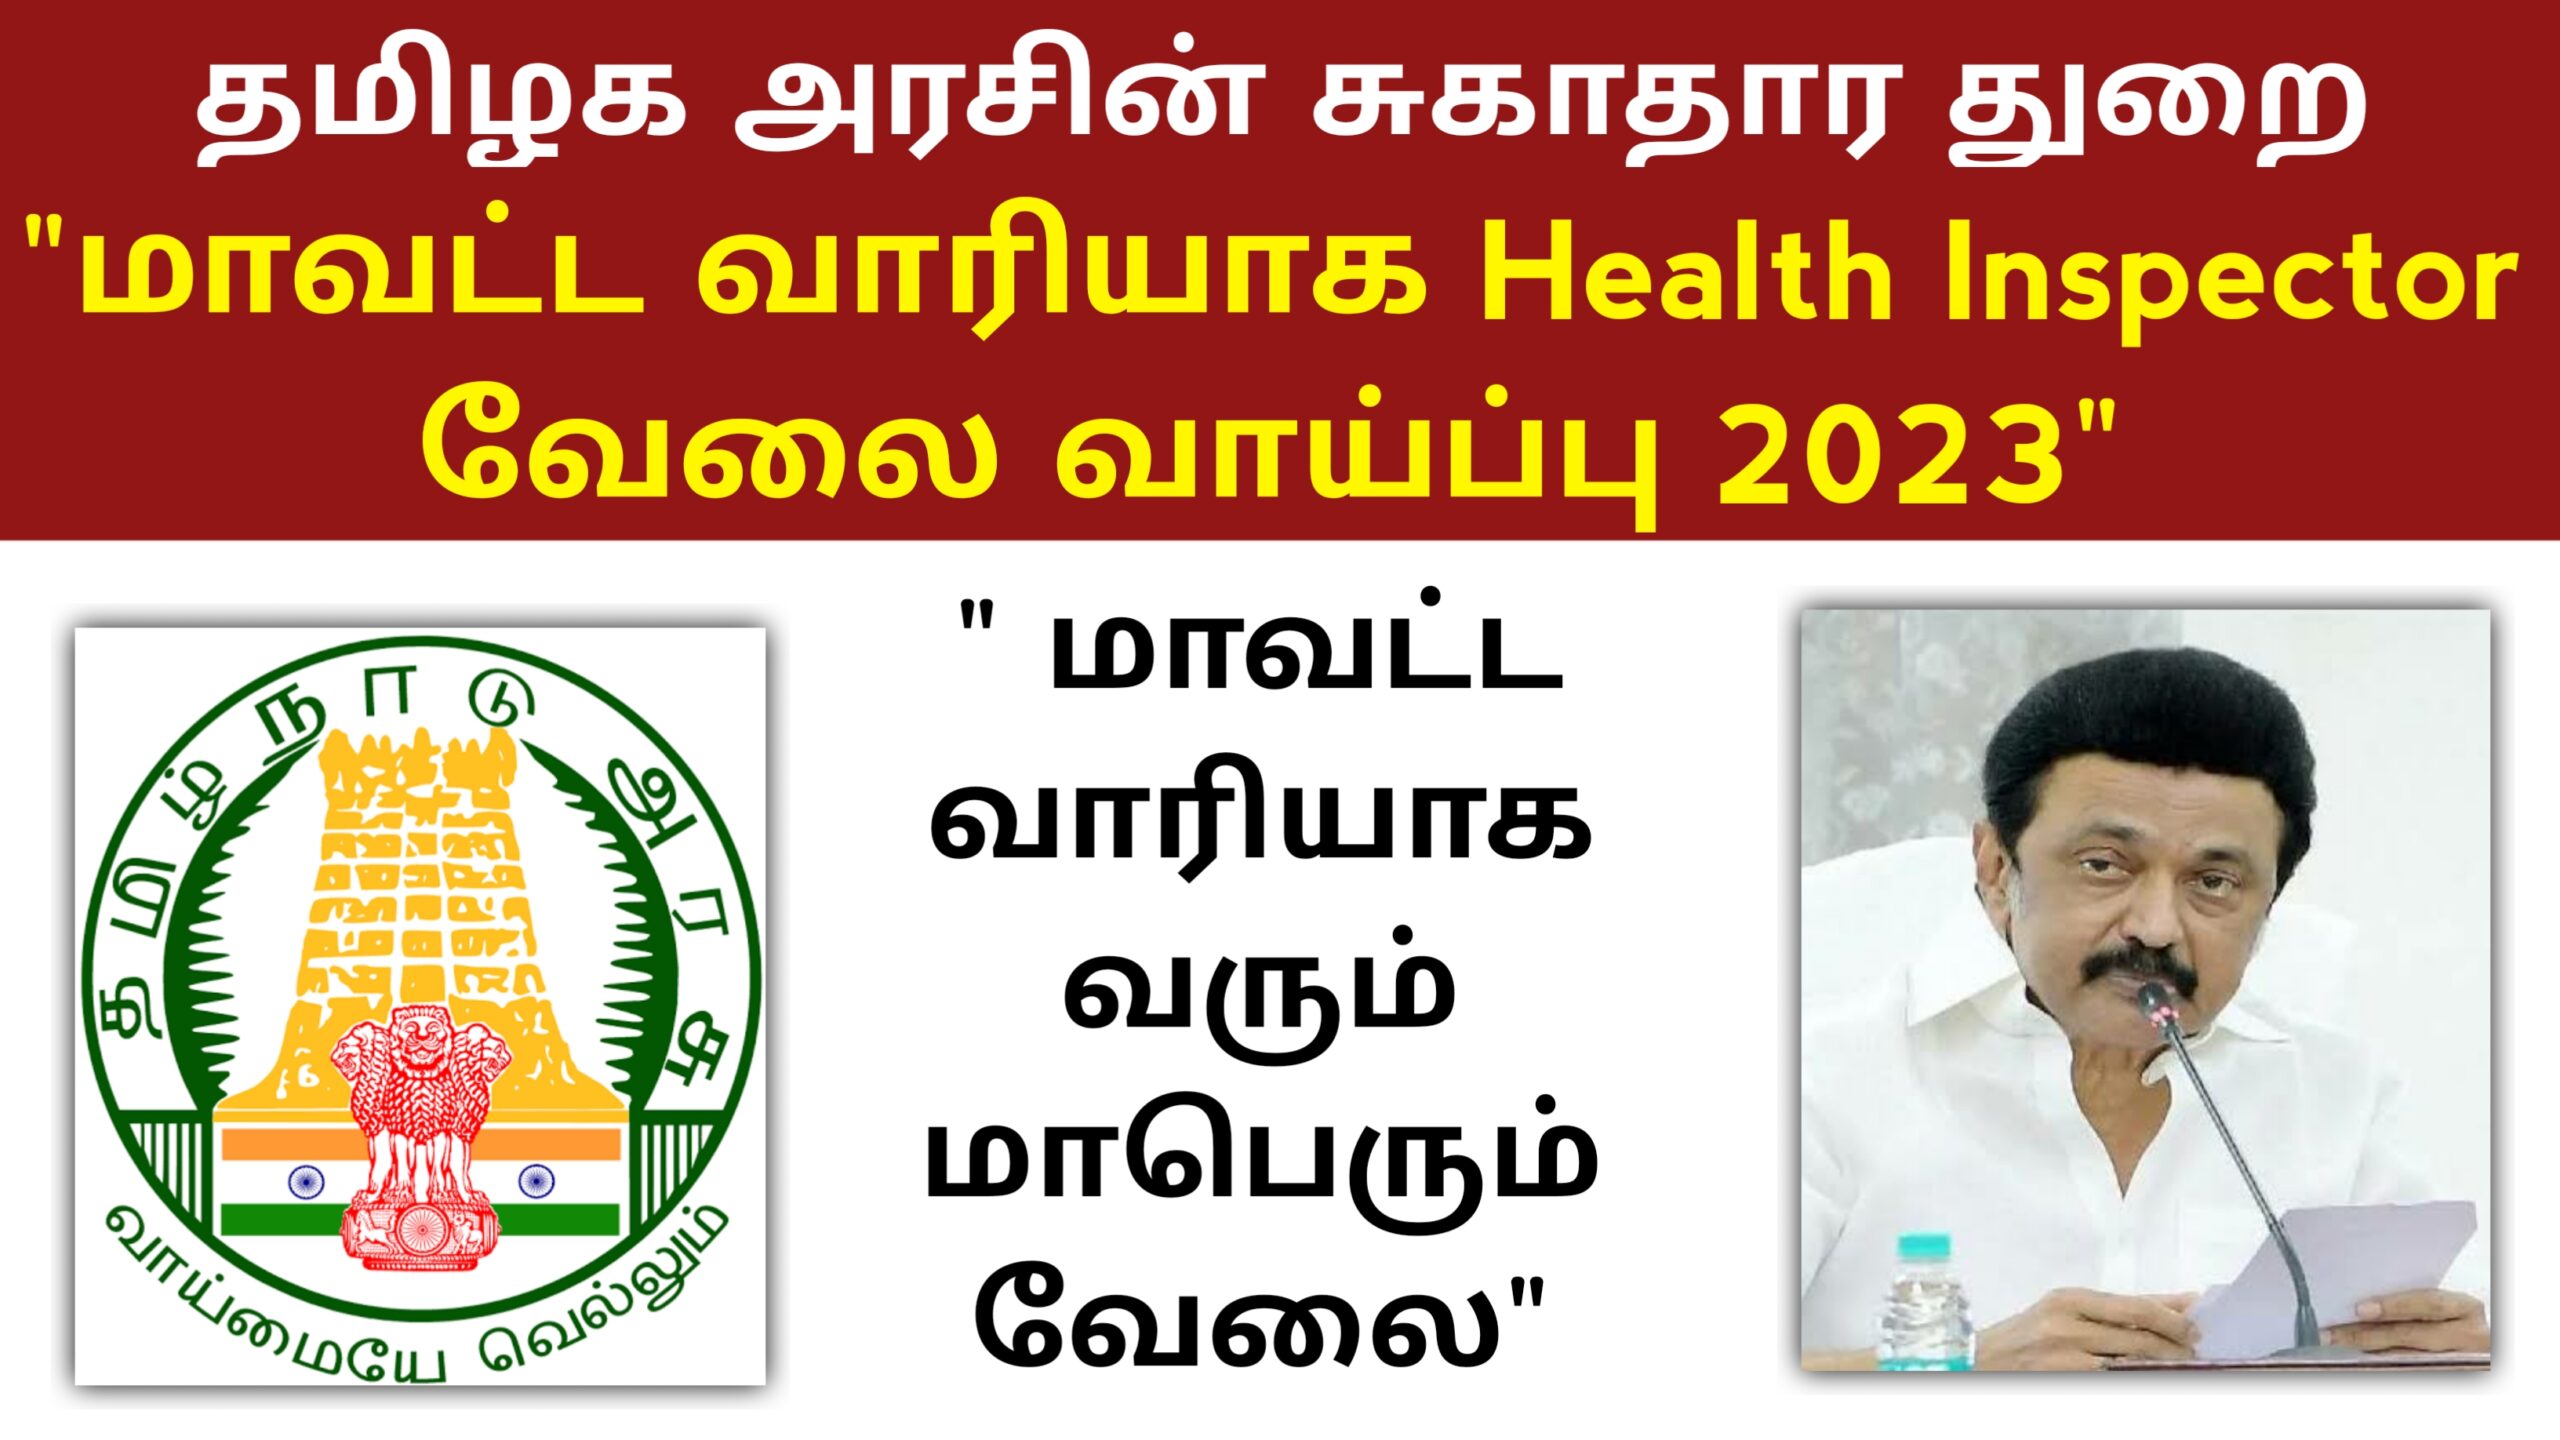 Tamilnadu Health Inspector Recruitment 2023